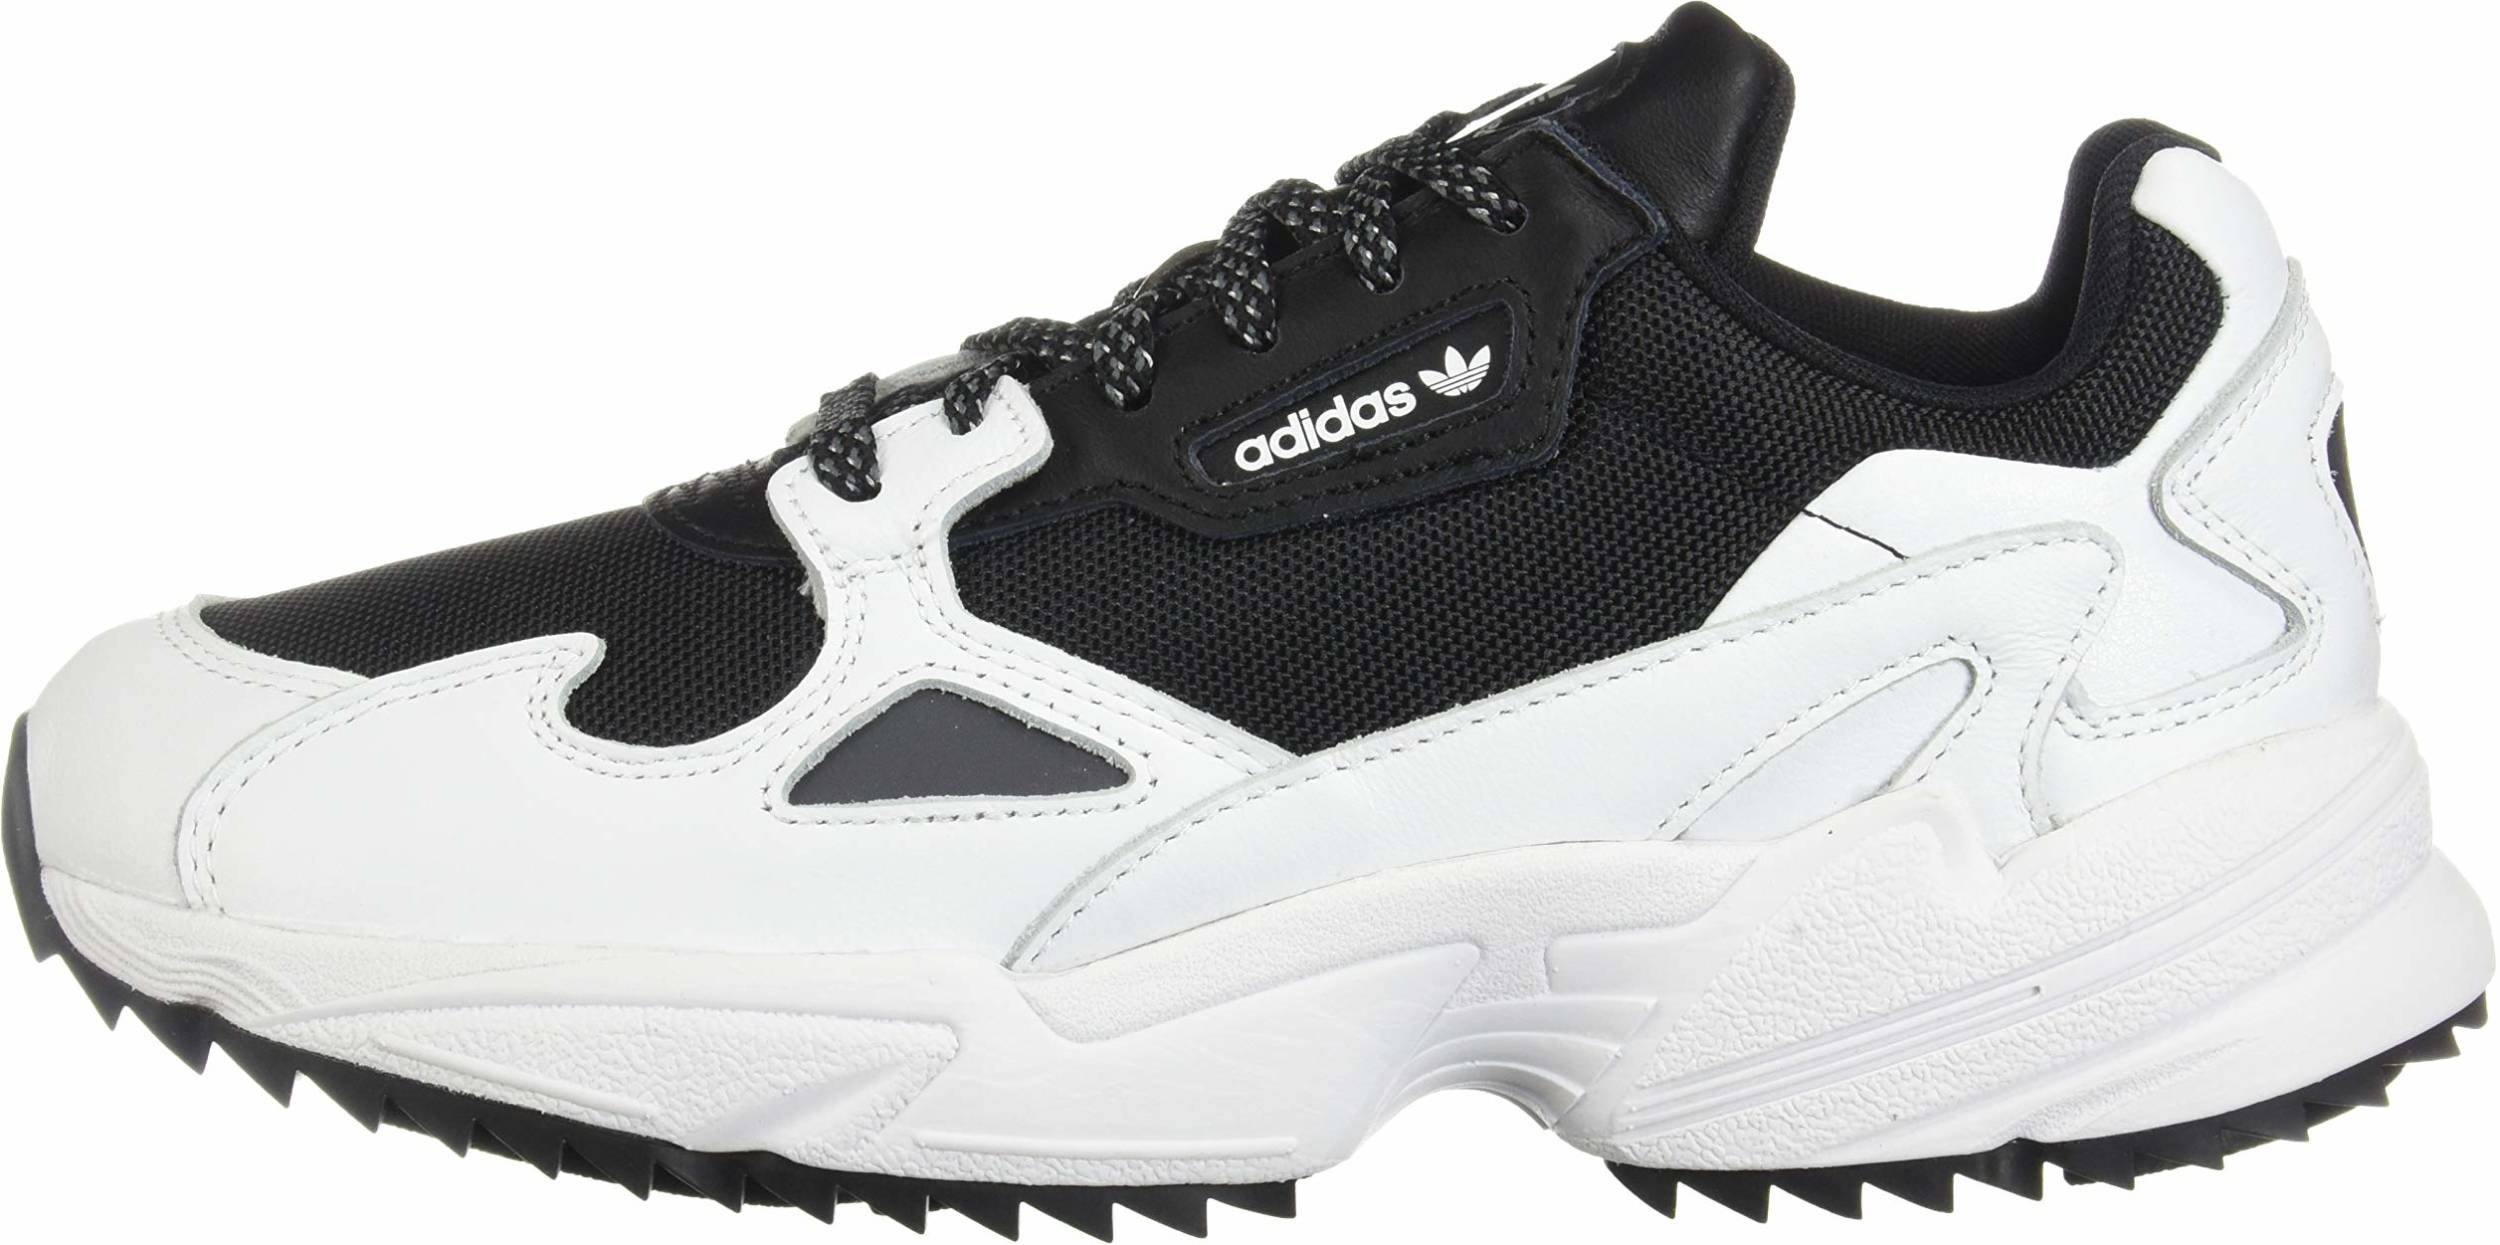 Adidas Falcon Trail sneakers in black 